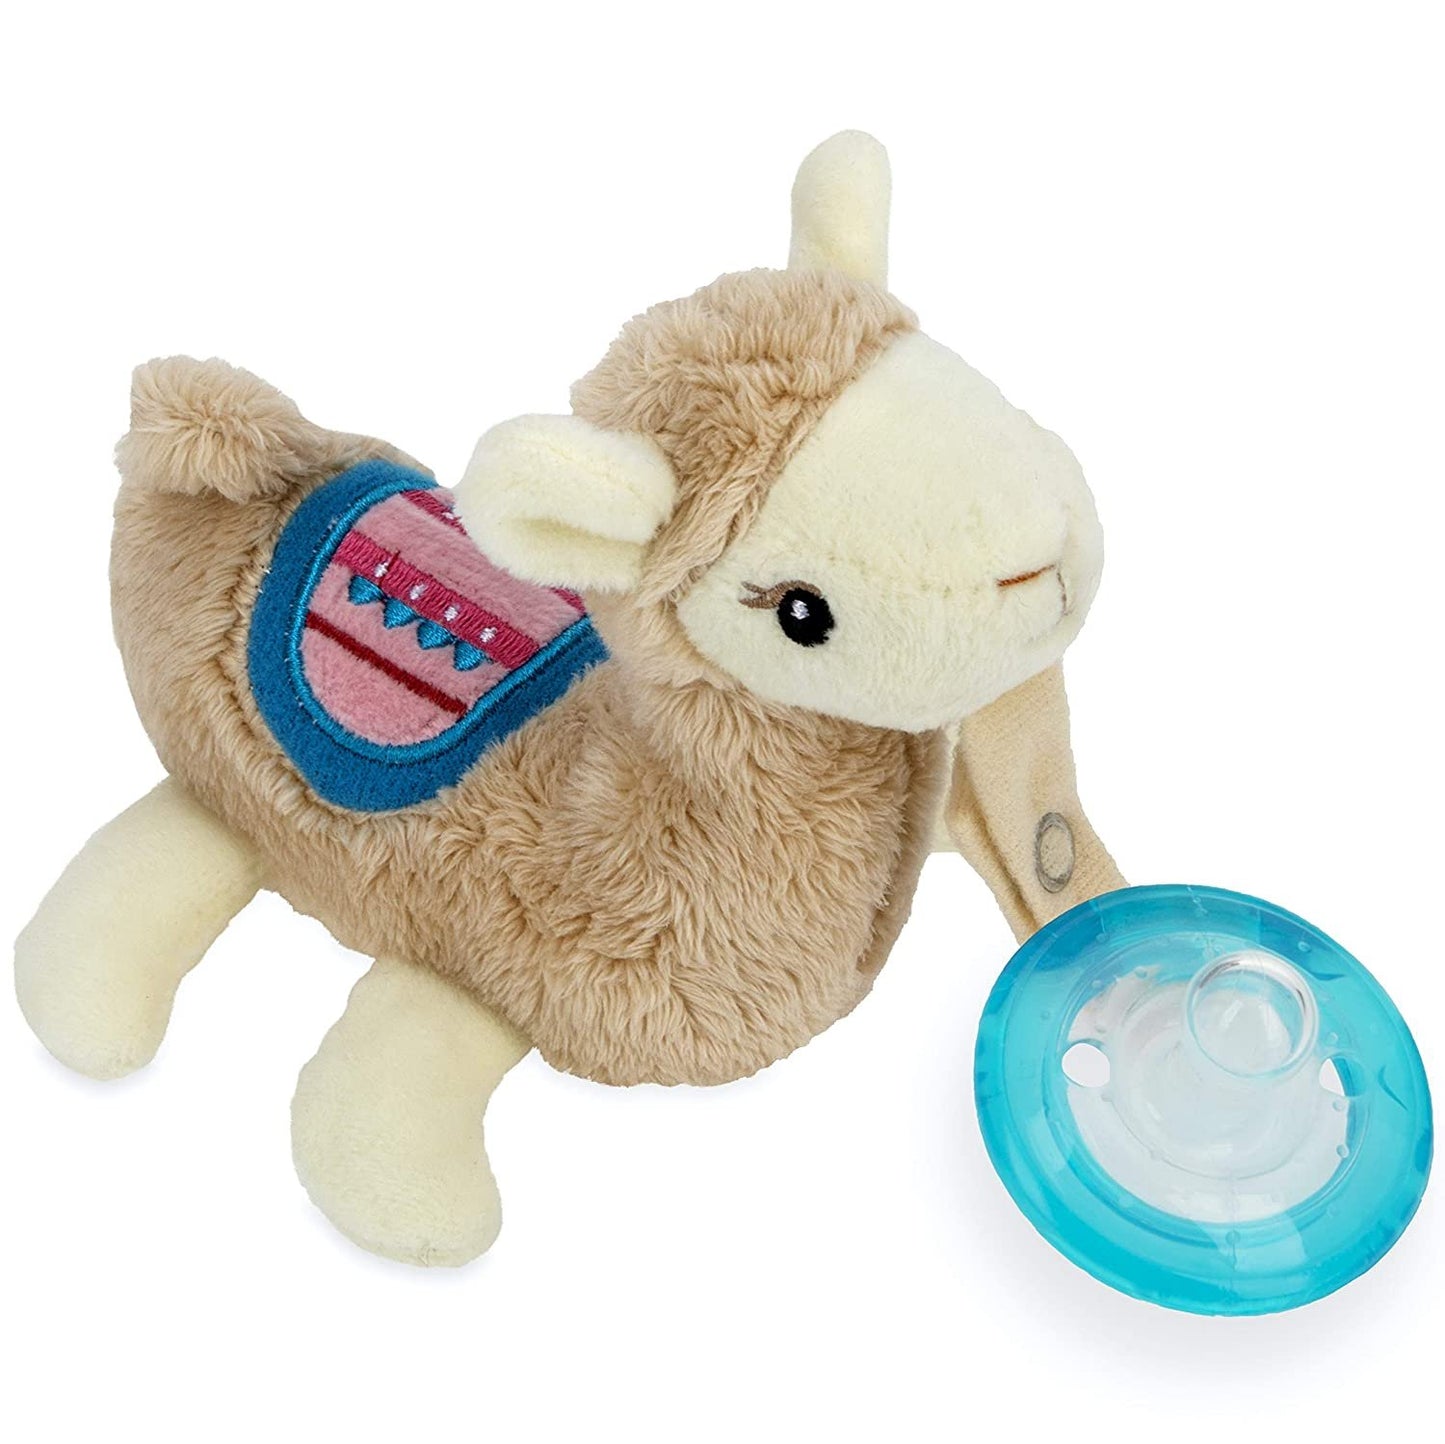 Nuby Llama Plush Toy Pacifier - blue/multi, one size